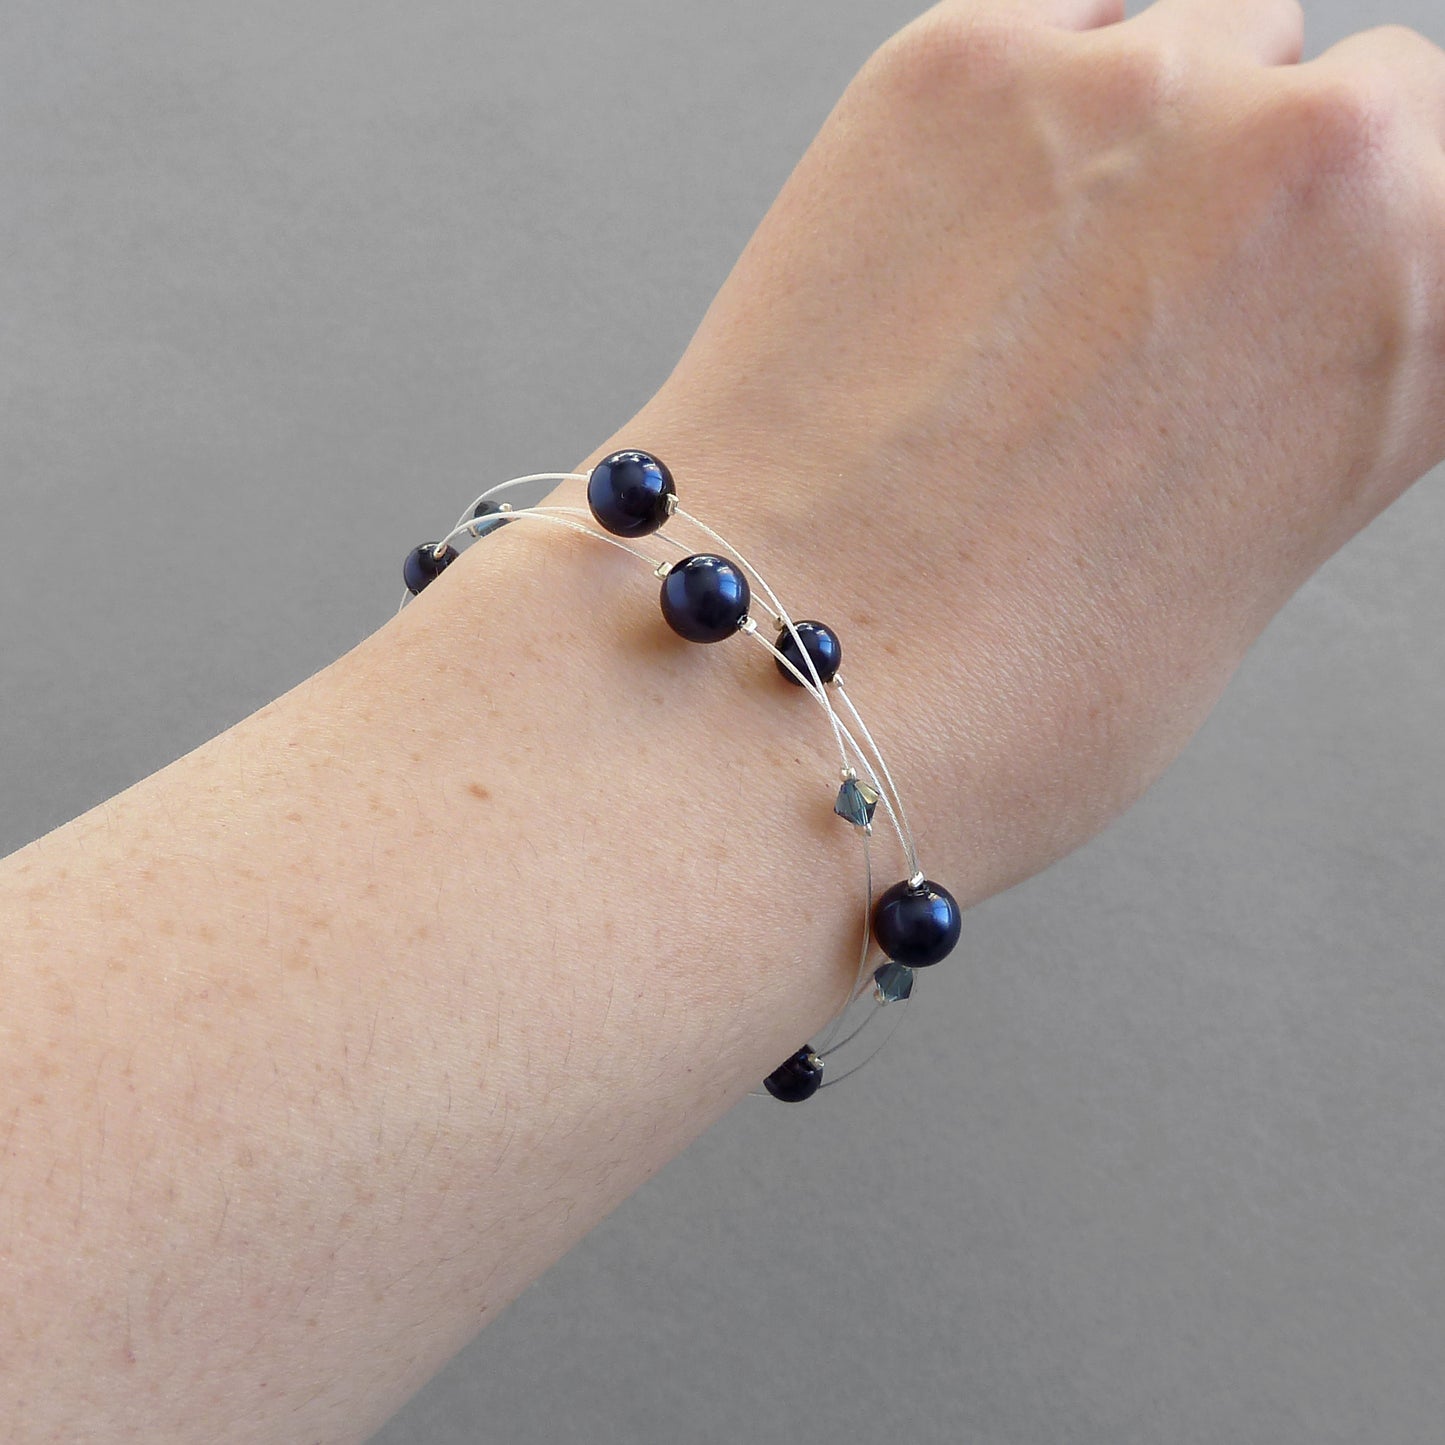 Navy blue pearl wedding bracelet